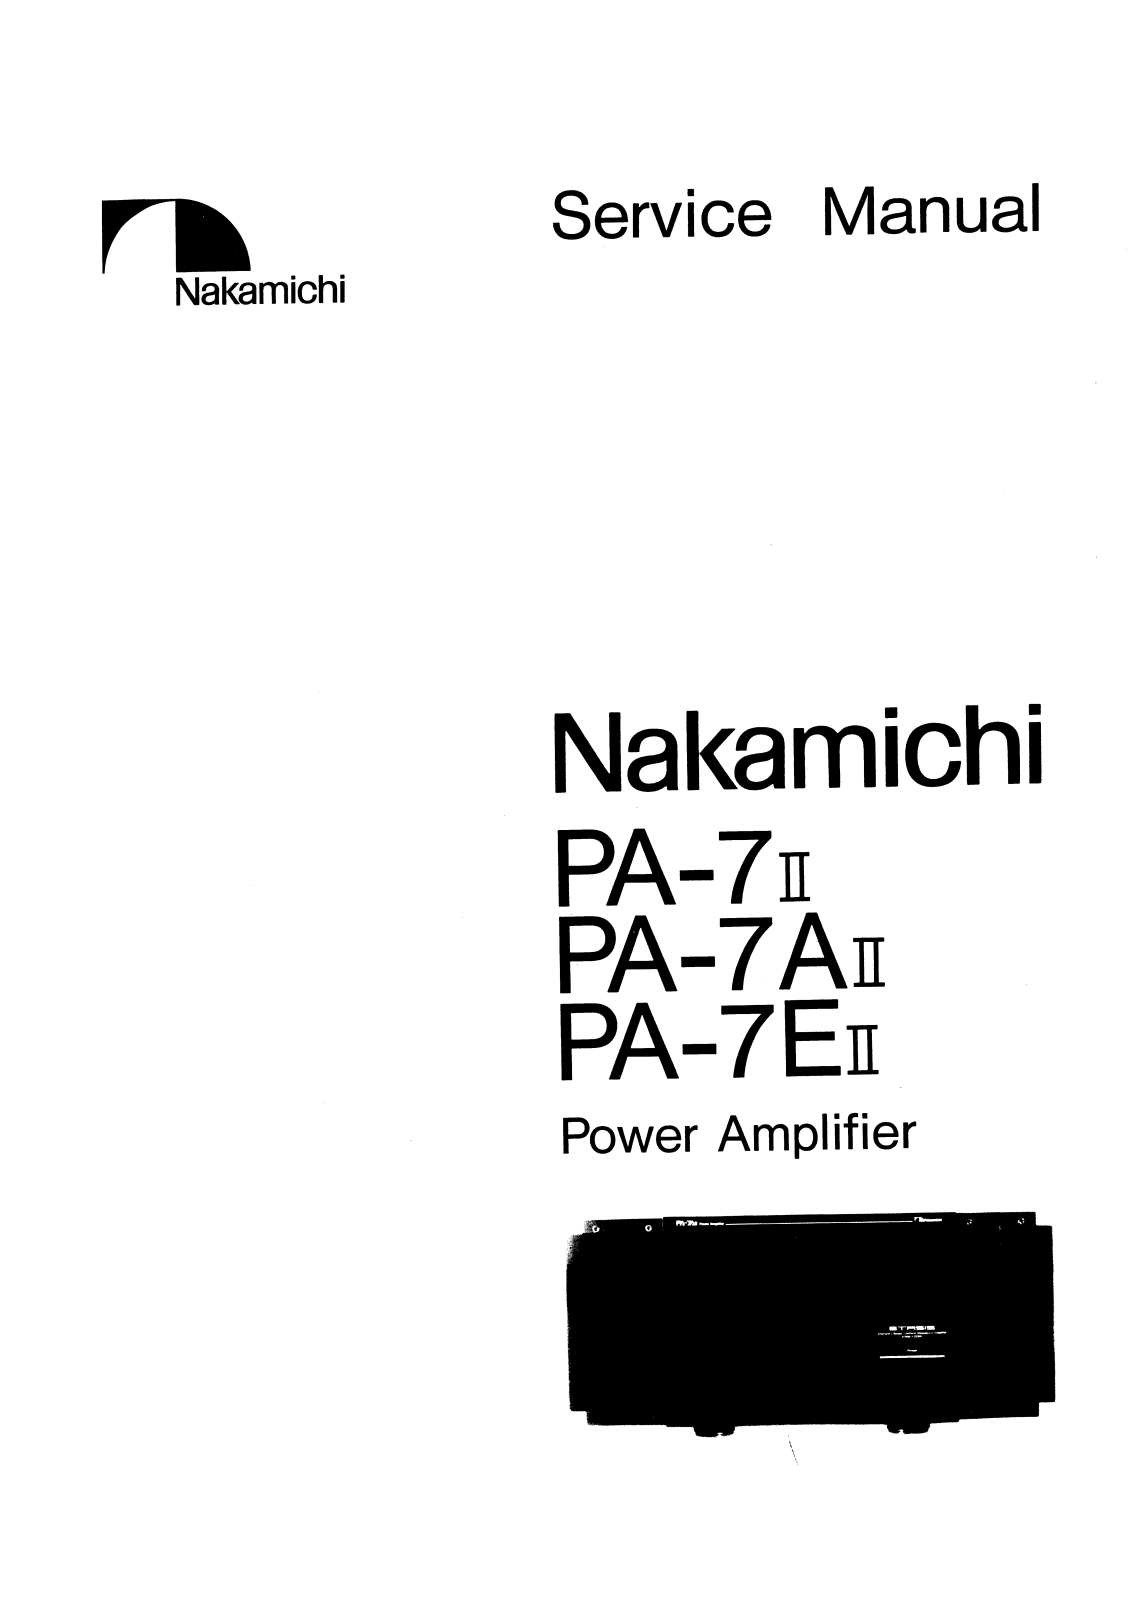 Nakamichi PA-7-A Mk2, PA-7-E Mk2, PA-7 Mk2 Service manual